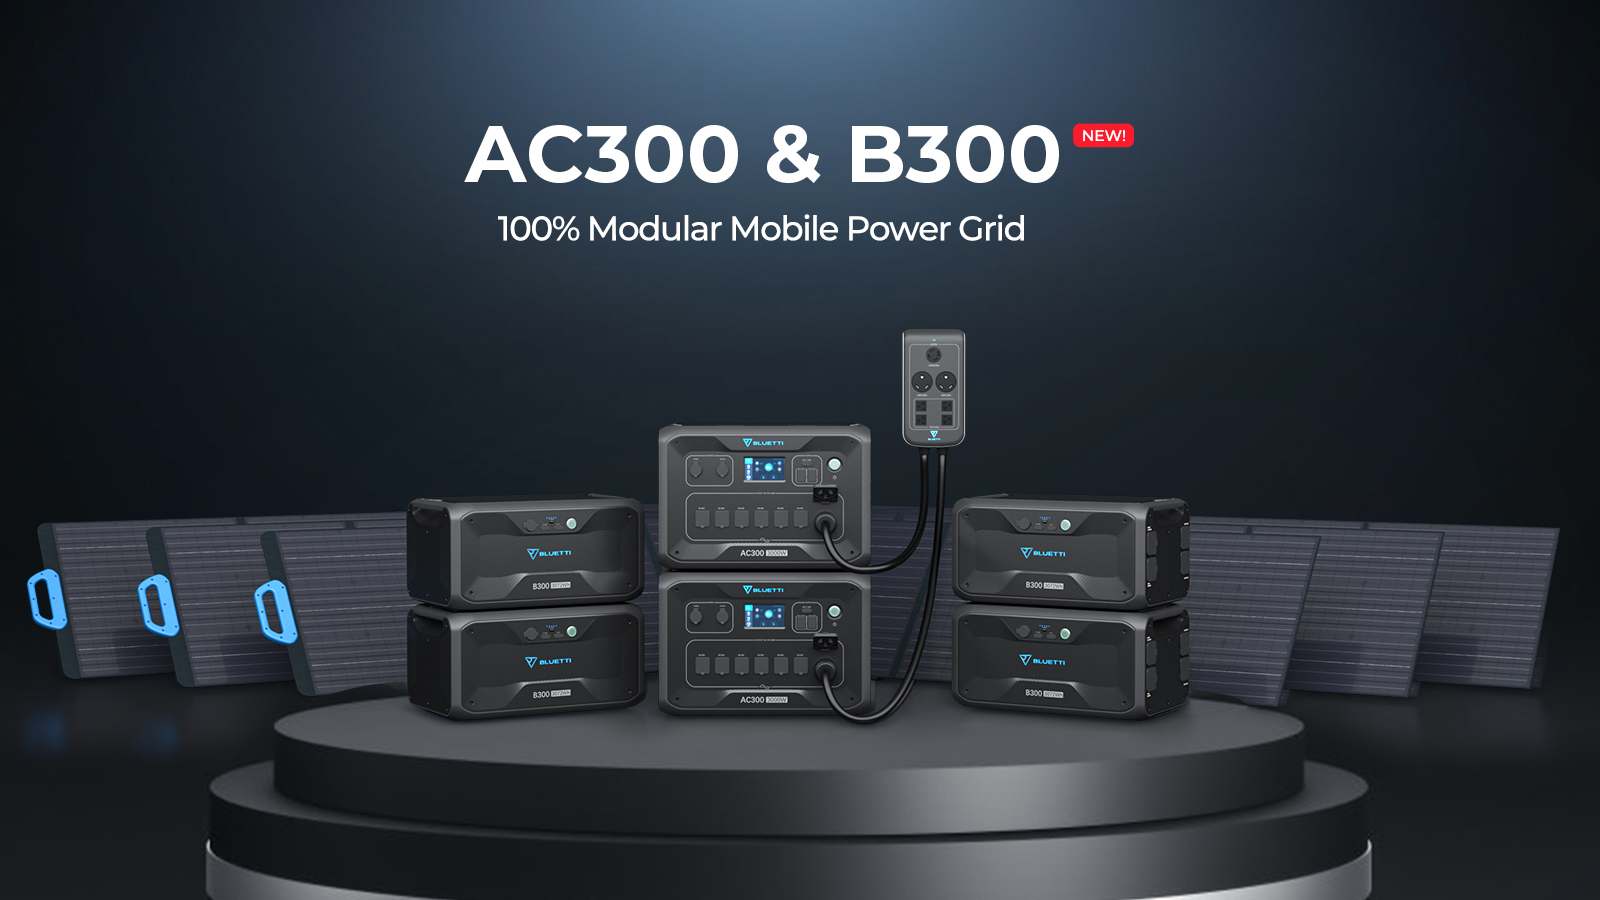 Bluetti AC300 and B300 modular mobile power grid